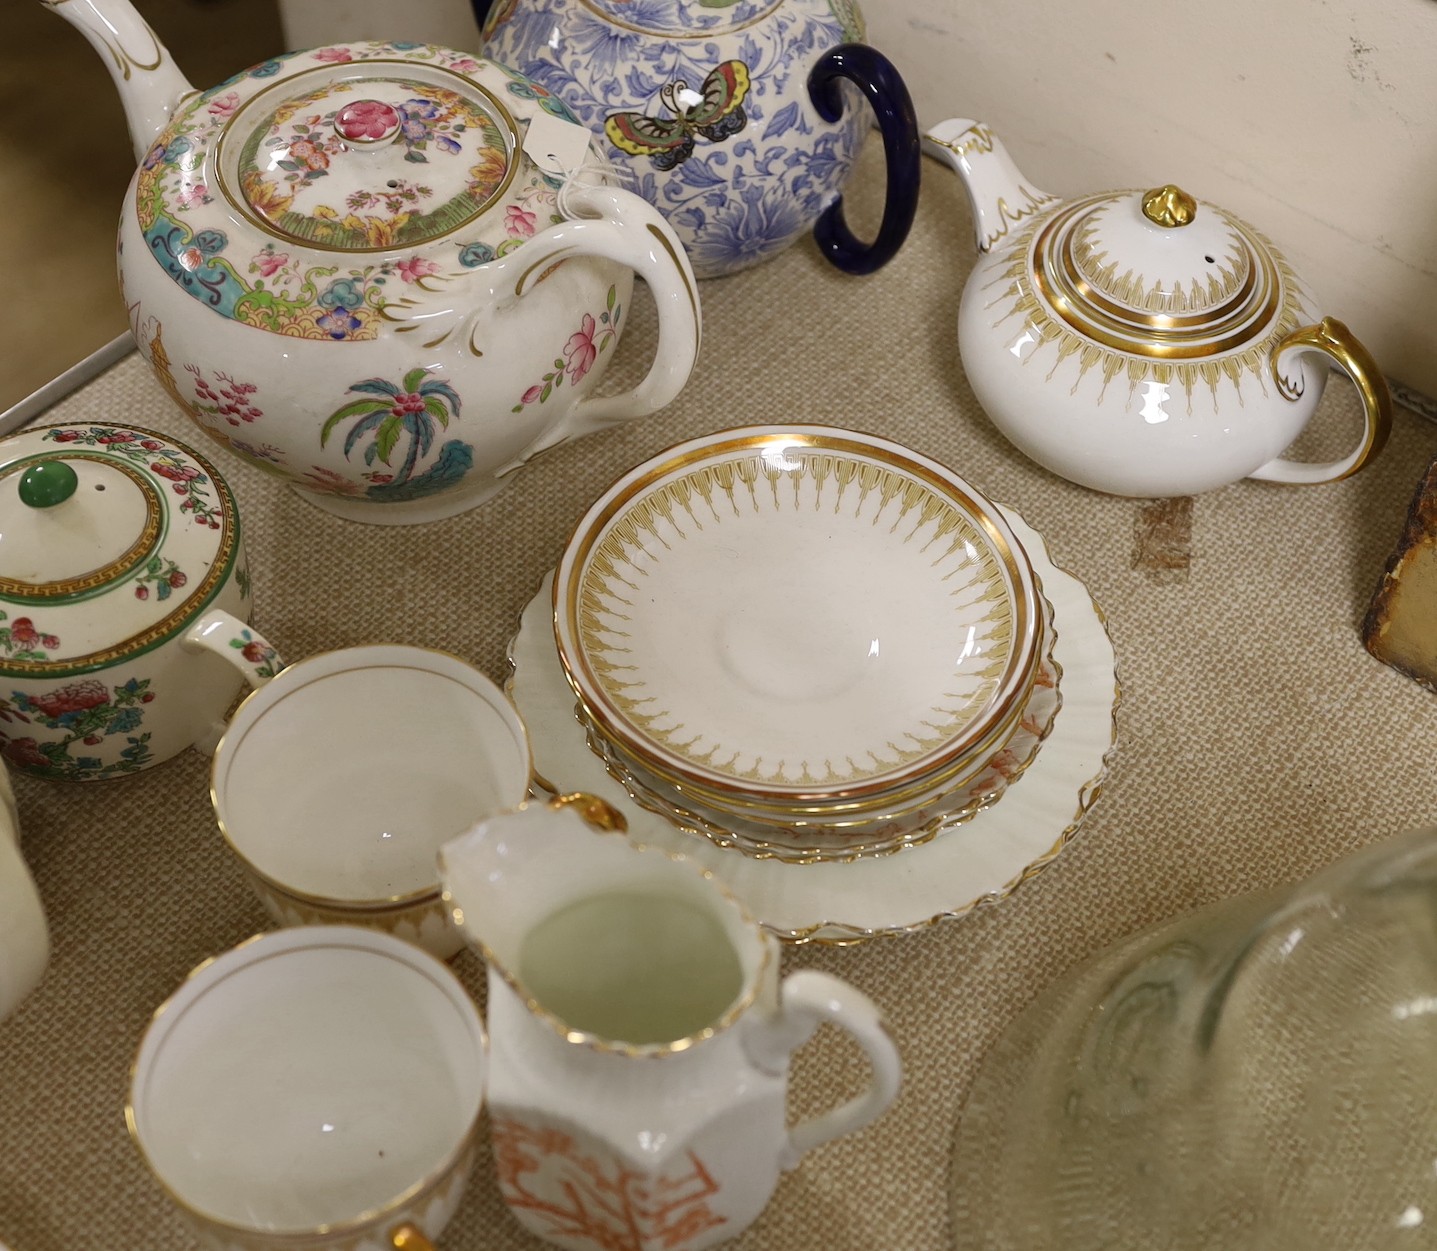 A quantity of tea pots and wares including Doulton, Royal Chelsea, etc.